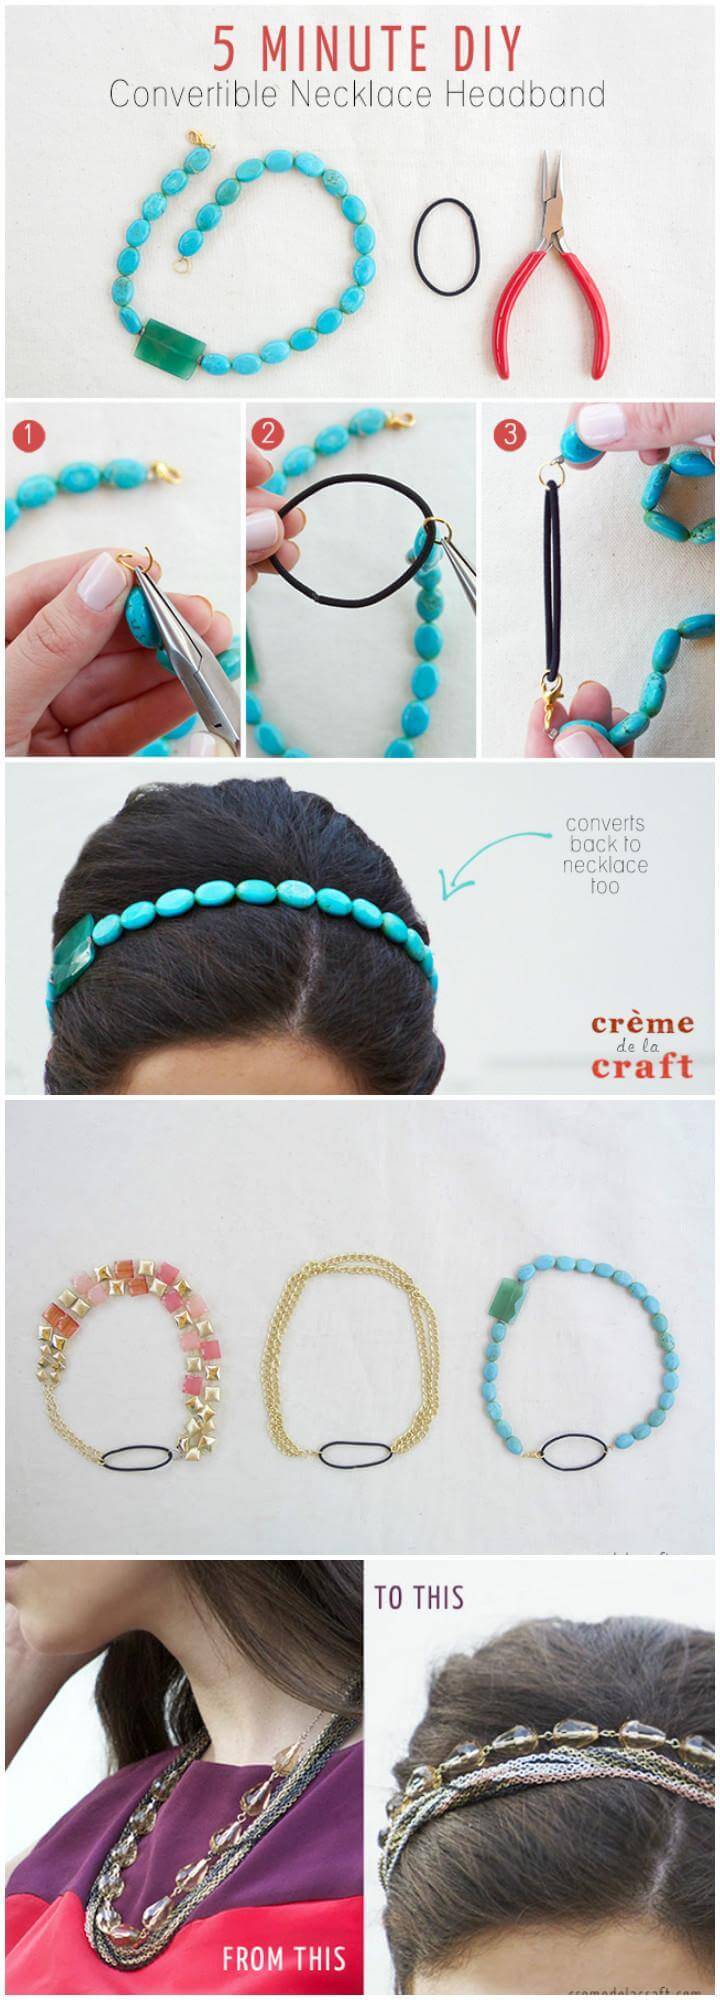 DIY Homemade 5 Minute Convertible Necklace Headband